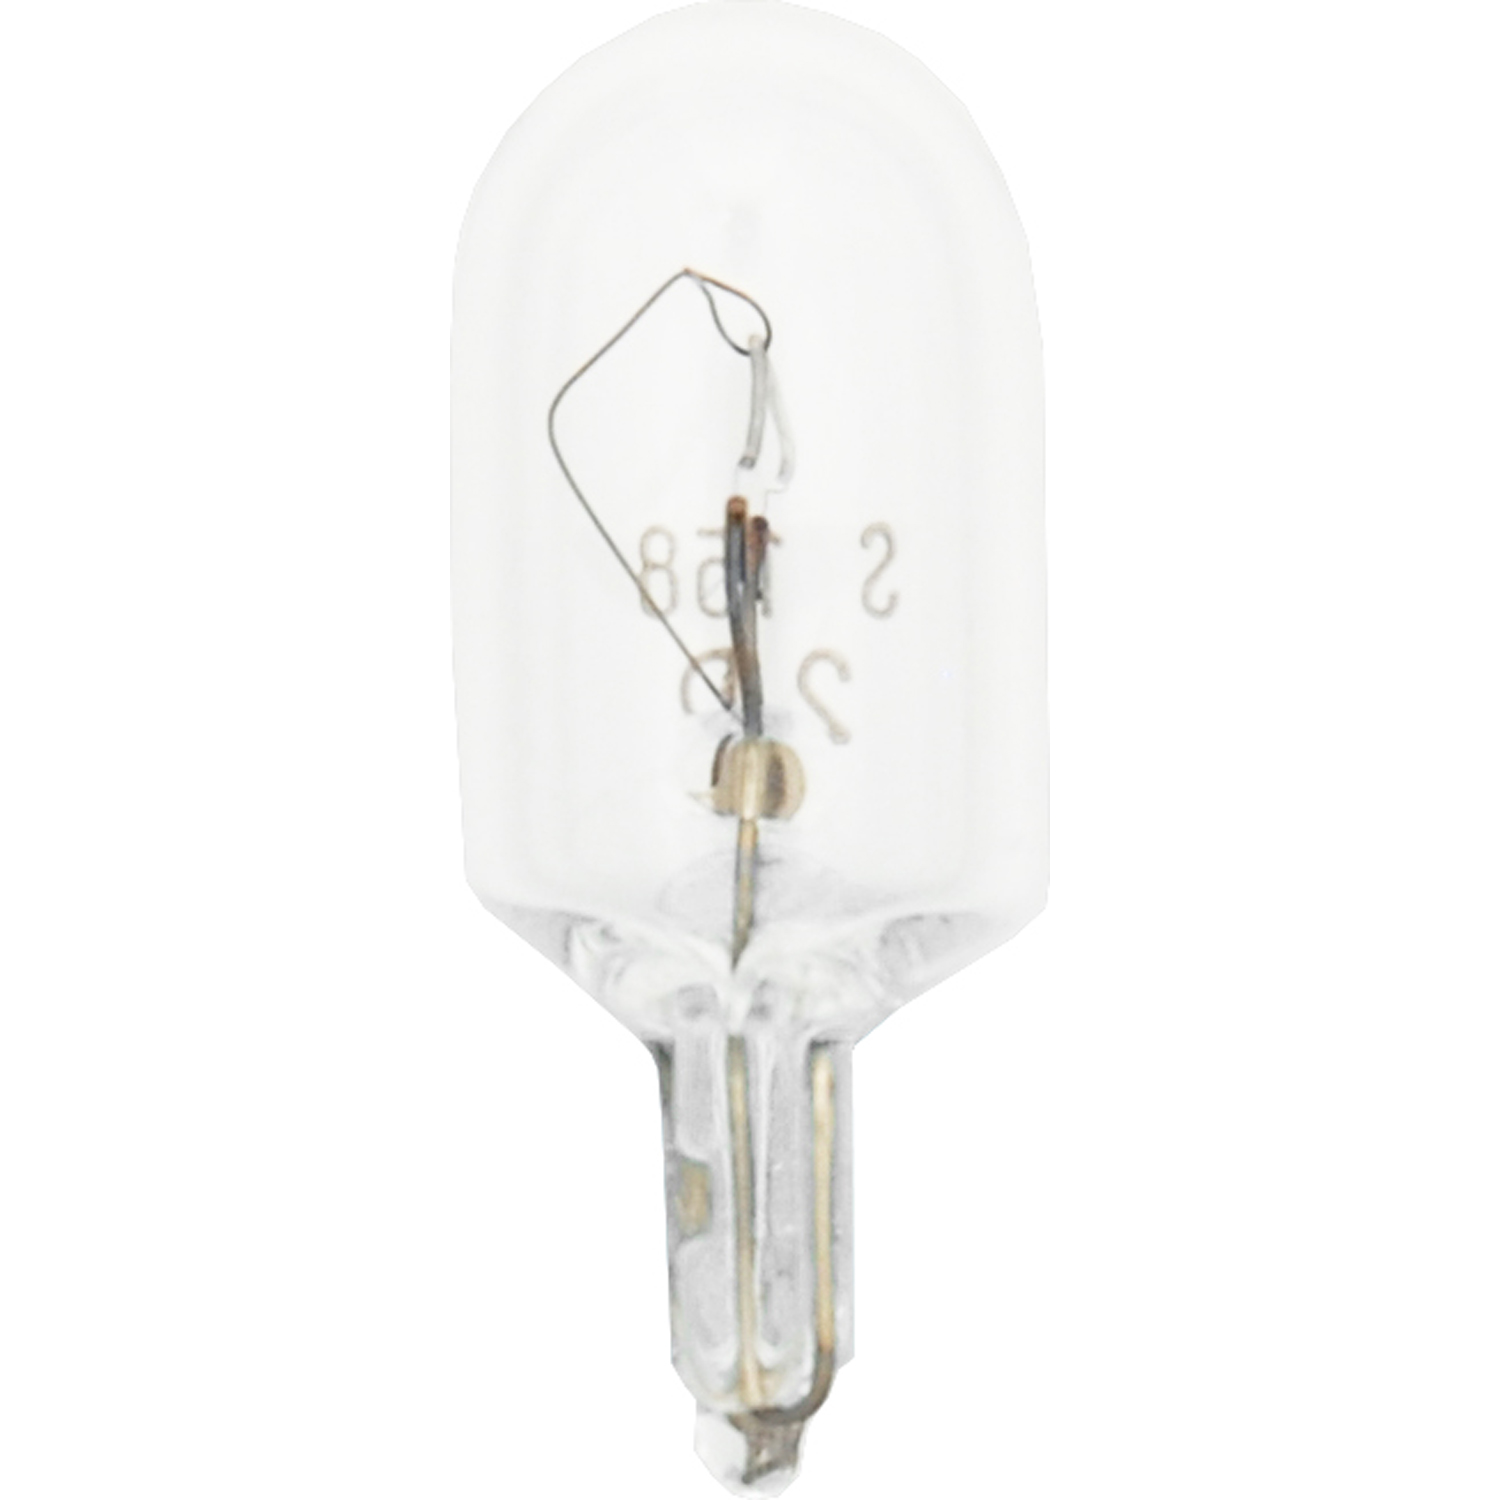 SYLVANIA RETAIL PACKS - Blister Pack Twin High Beam Indicator Light Bulb - SYR 161.BP2